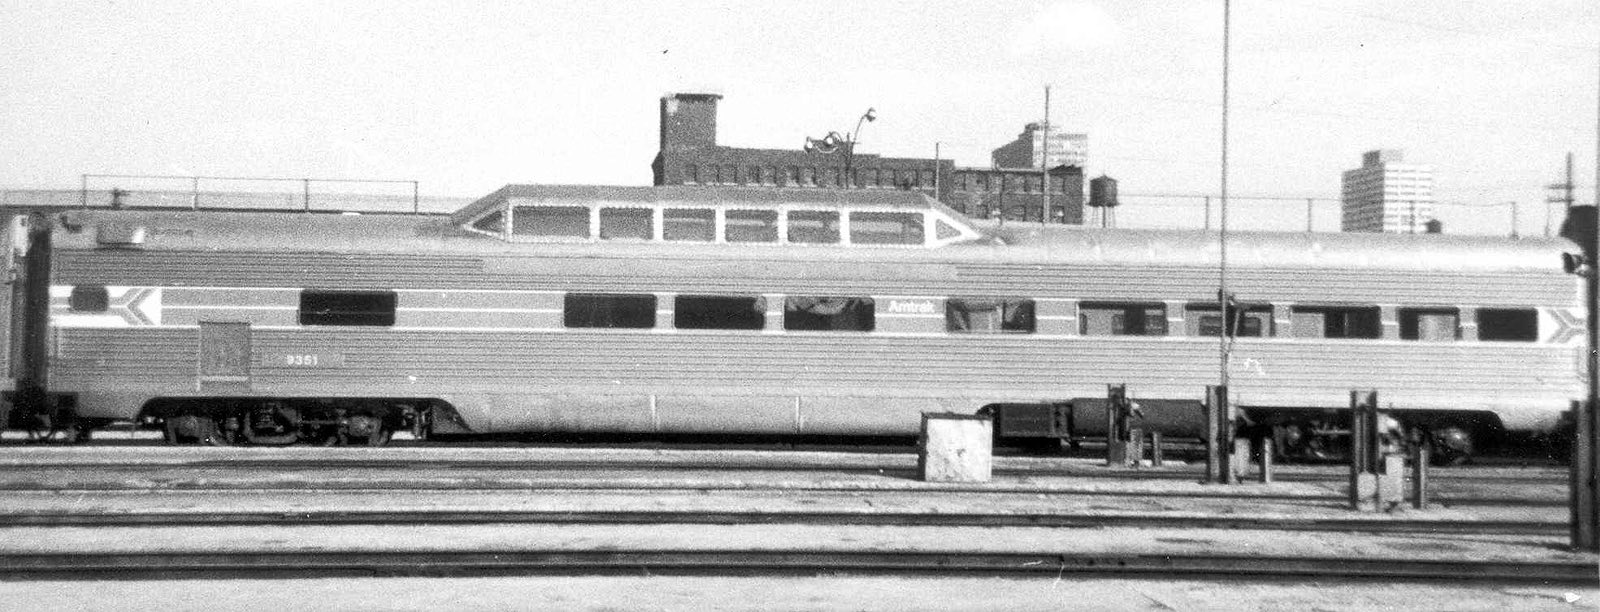 Amtrak #9351, Chicago, IL